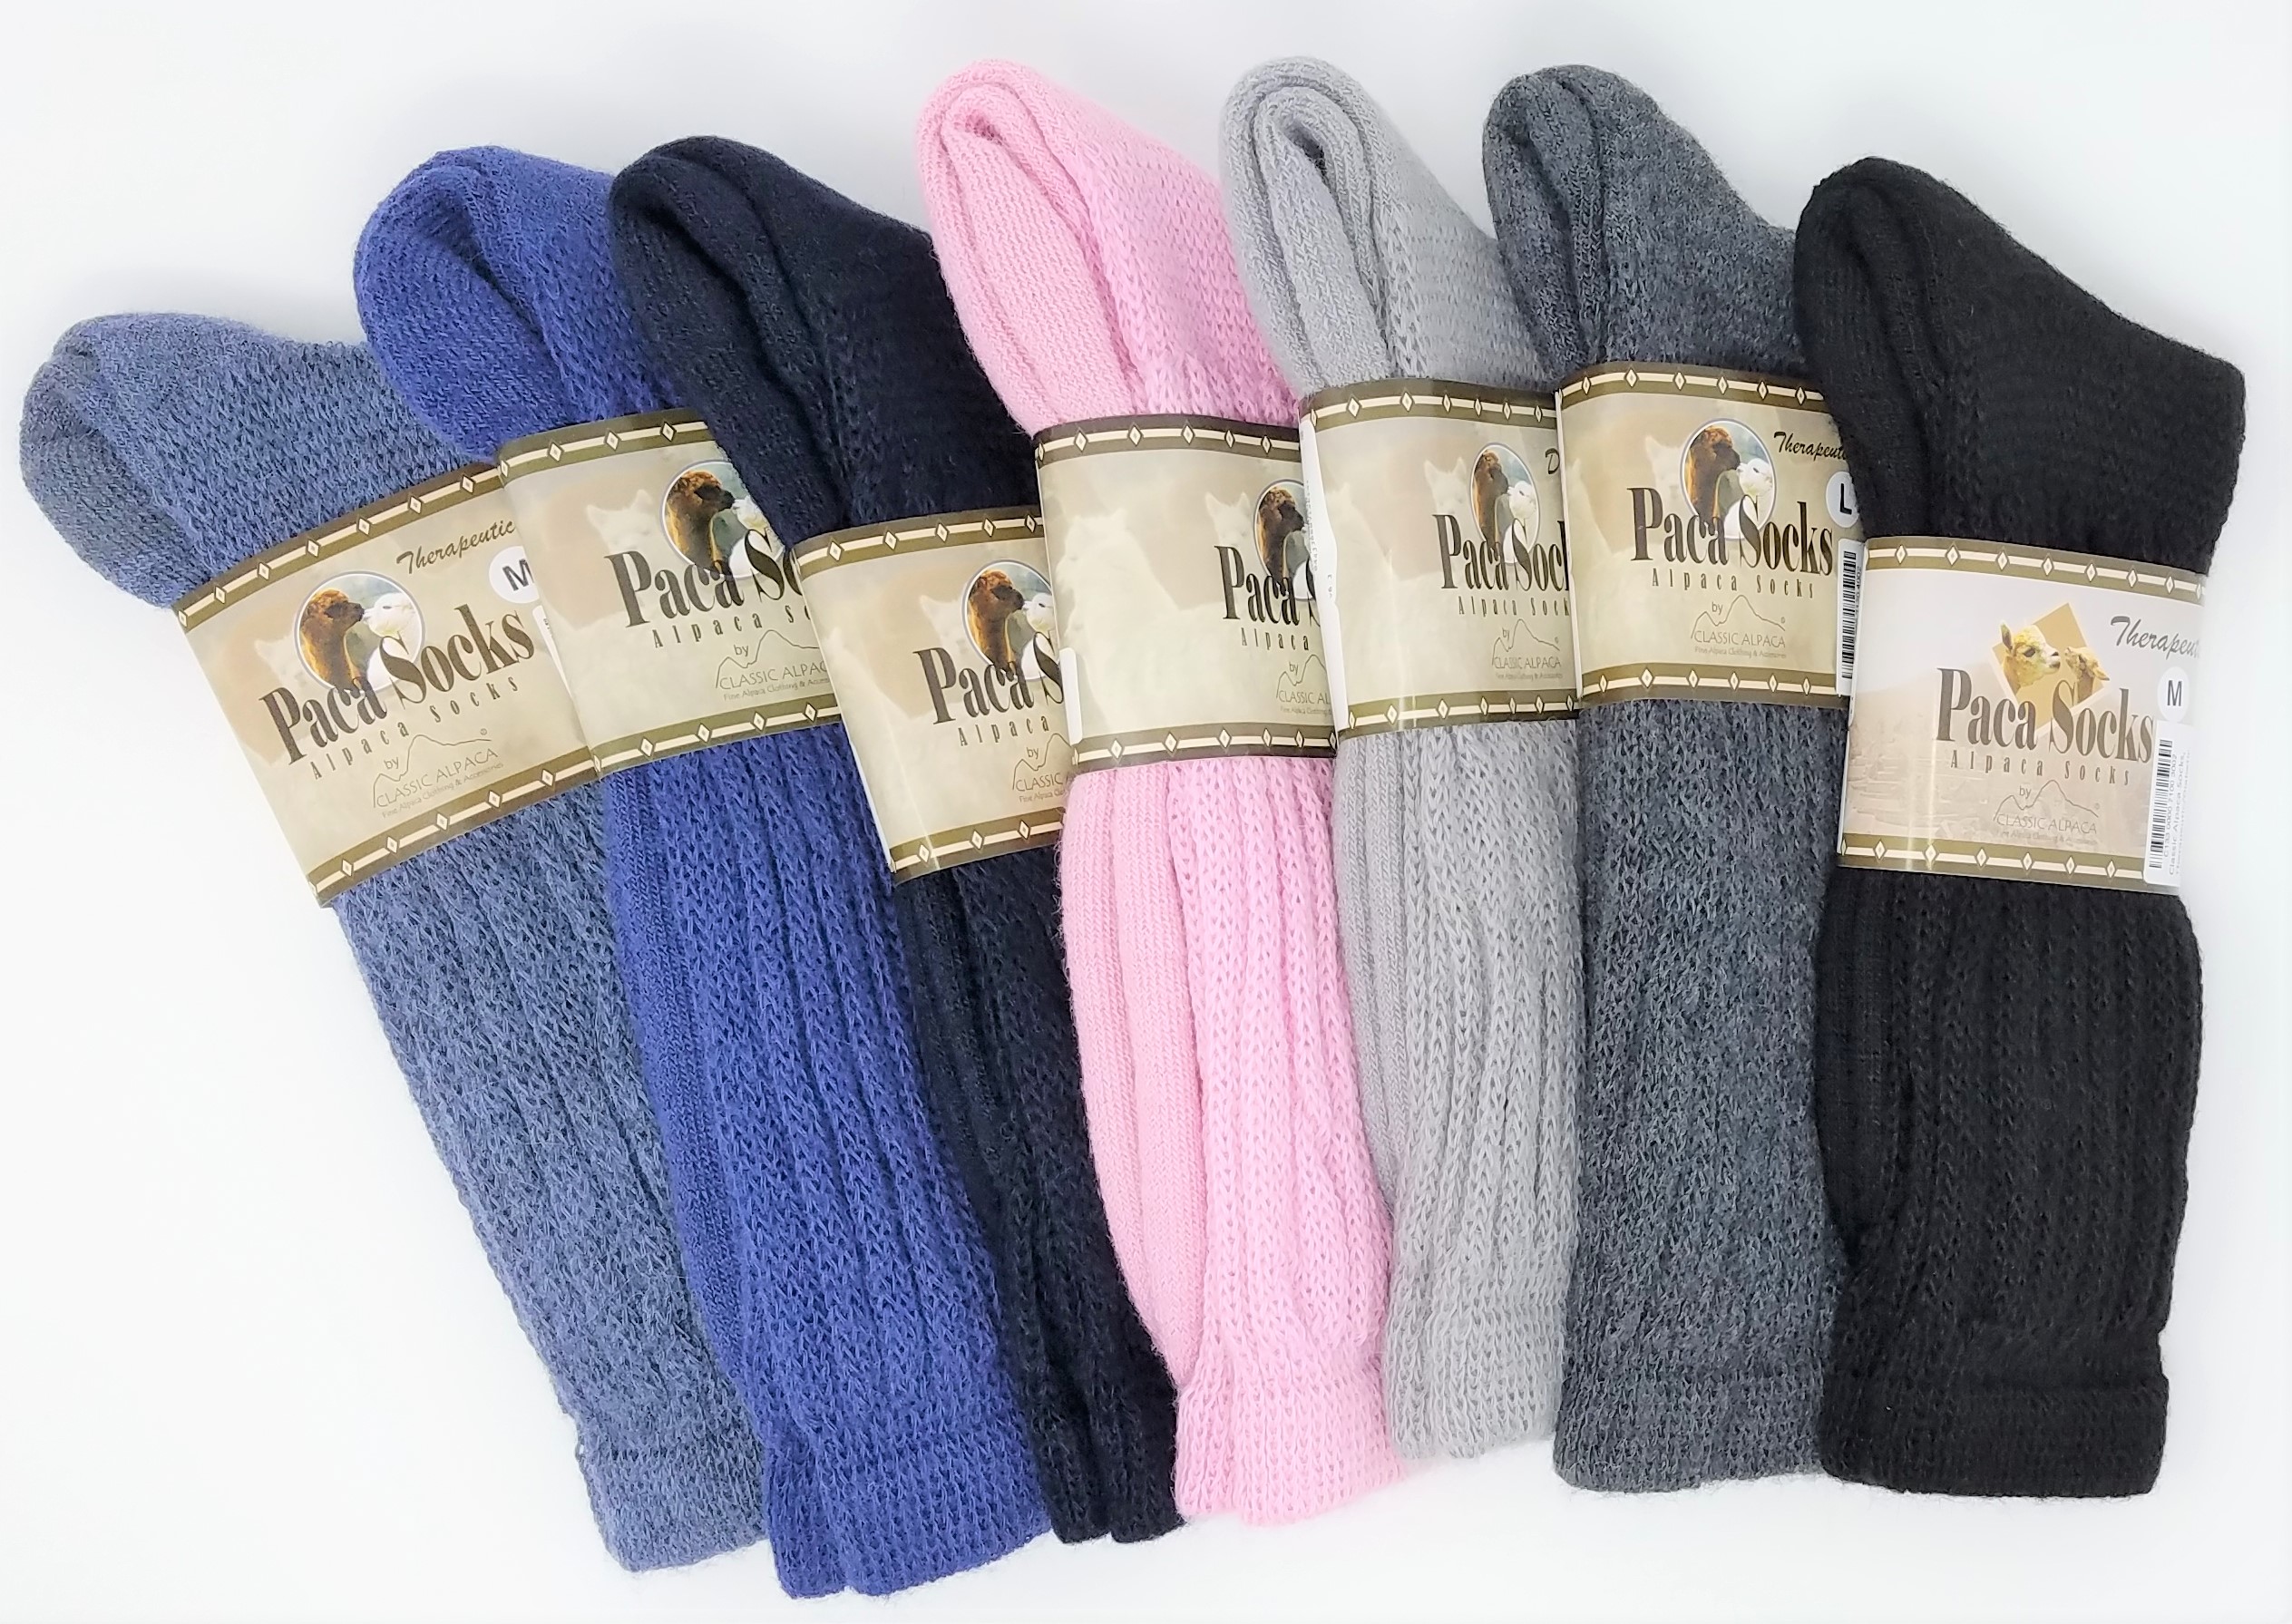 SlipperBootie Alpaca Socks - Made in the USA